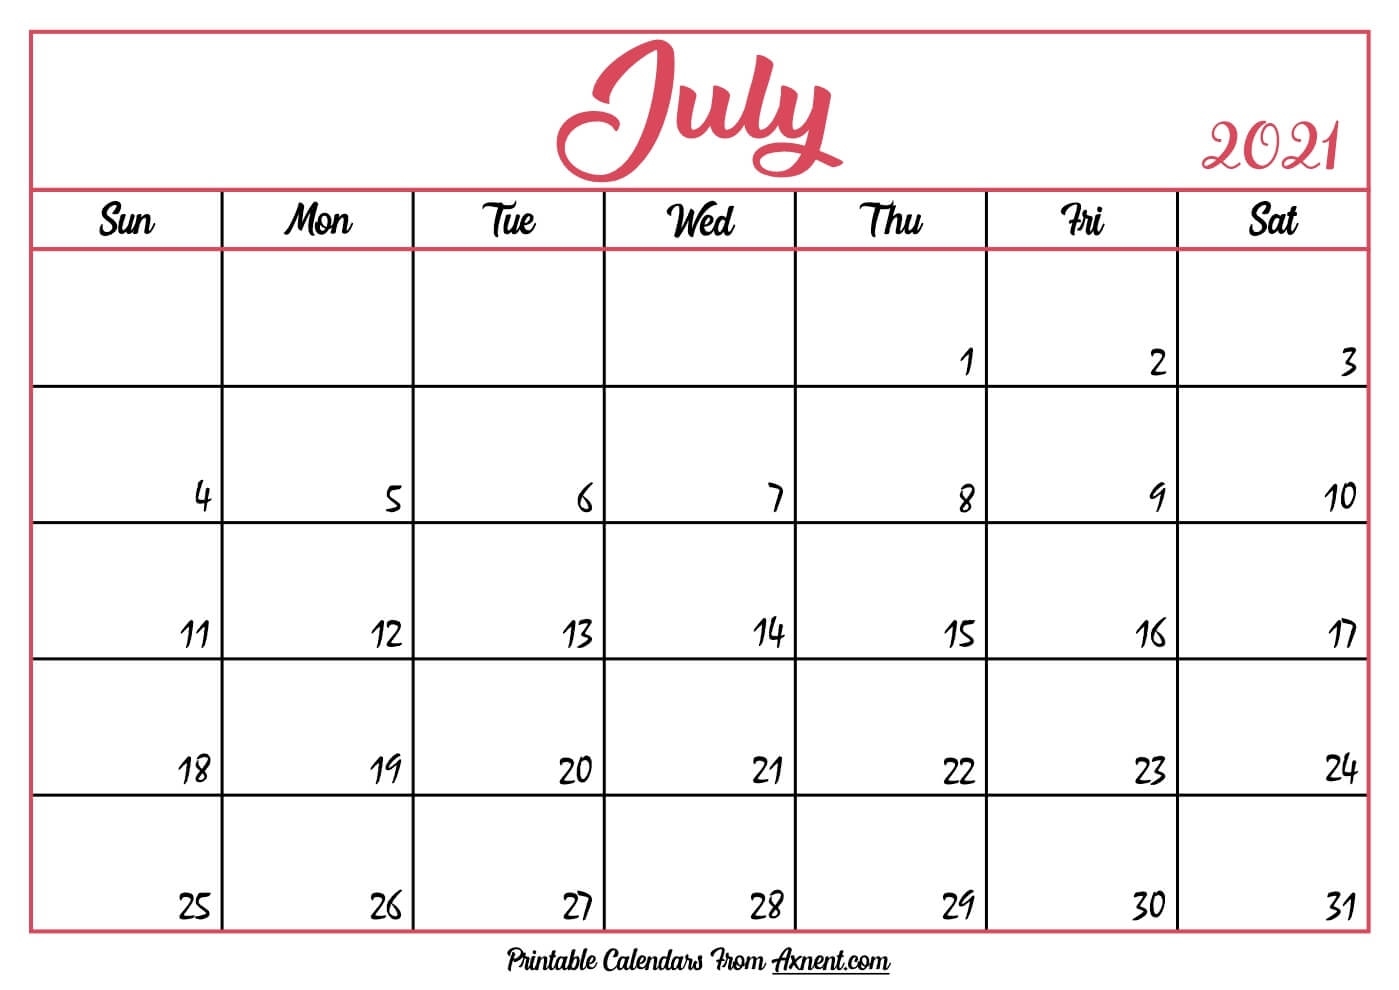 Printable July 2021 Calendar Template - Time Management Tools Printable July 2021 Calendar Template Www.wiki-Calendar.com July 2021